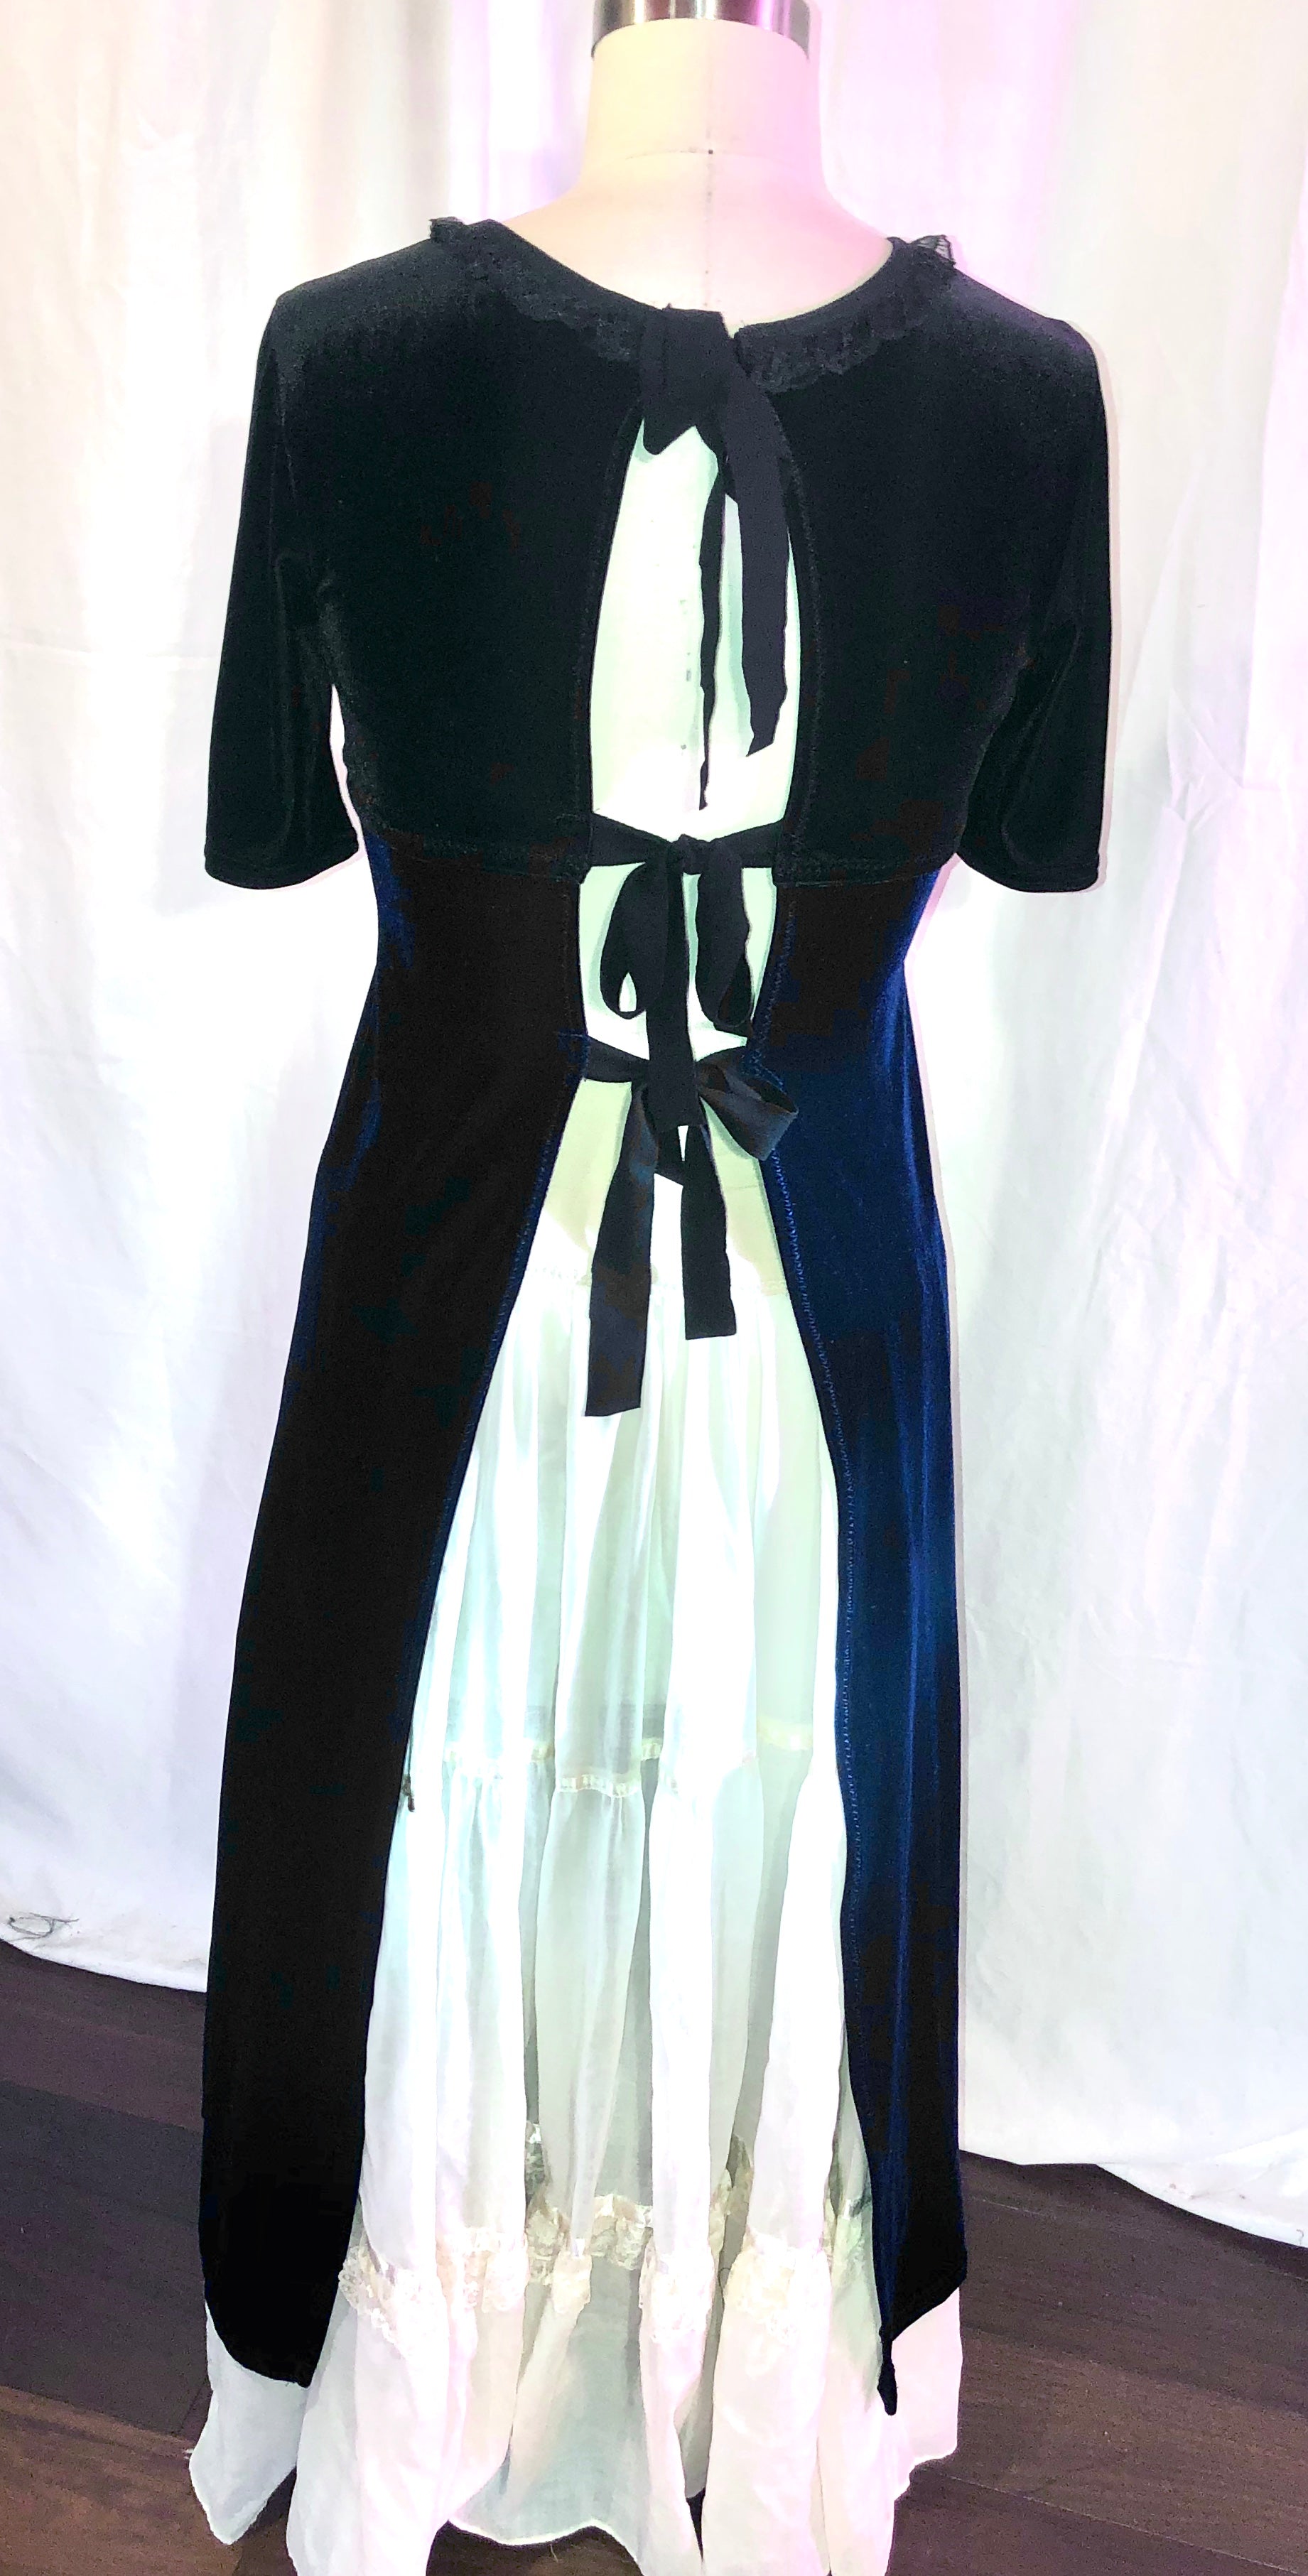 Black & Blue Stretch Velvet Apron/Dress